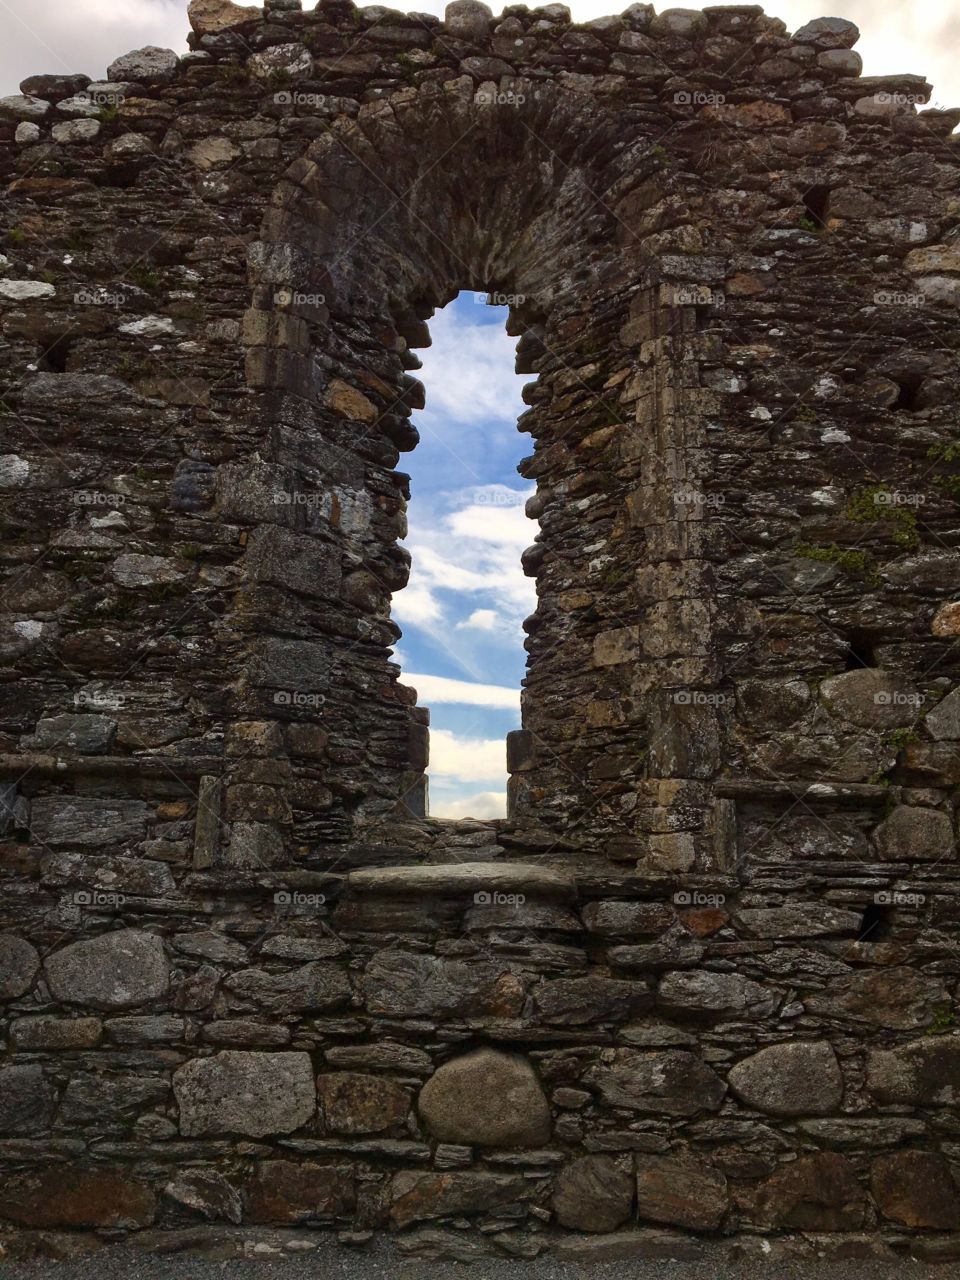 Sky view through castle slit window